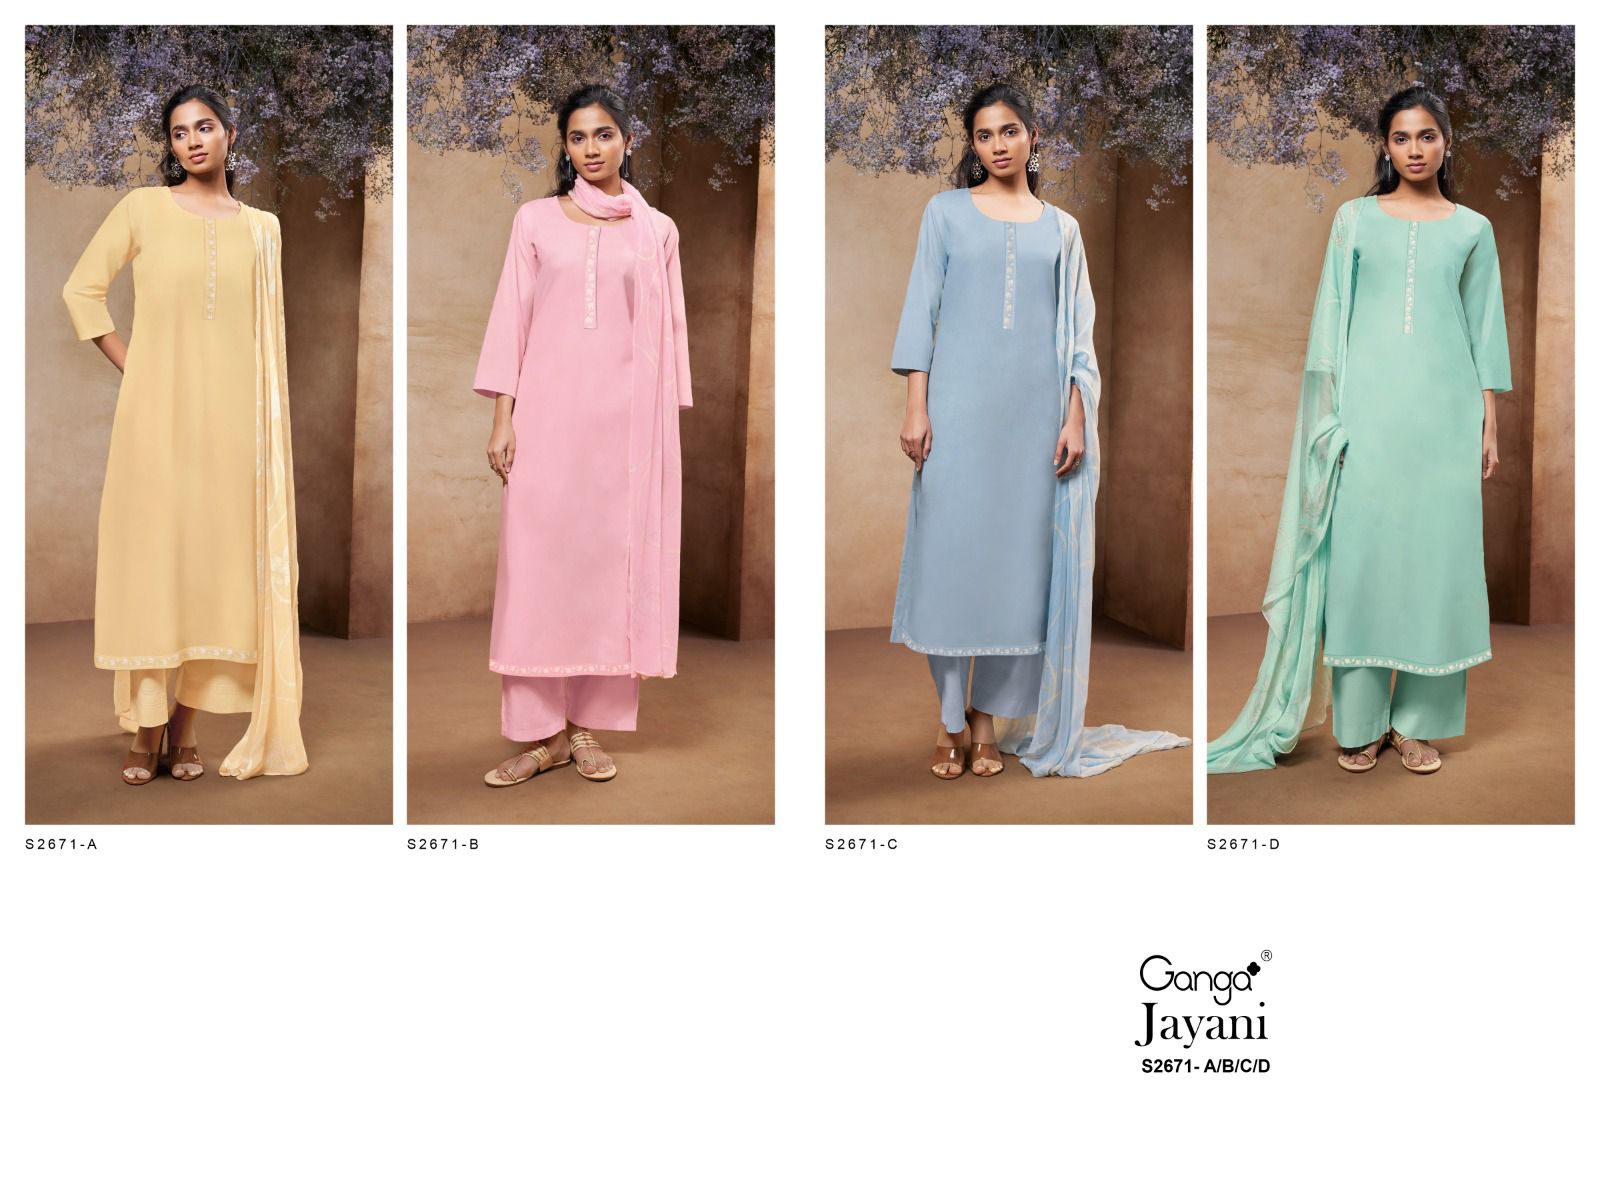 Jayani-2671 Ganga Premium Cotton Plazzo Style Suits Wholesale